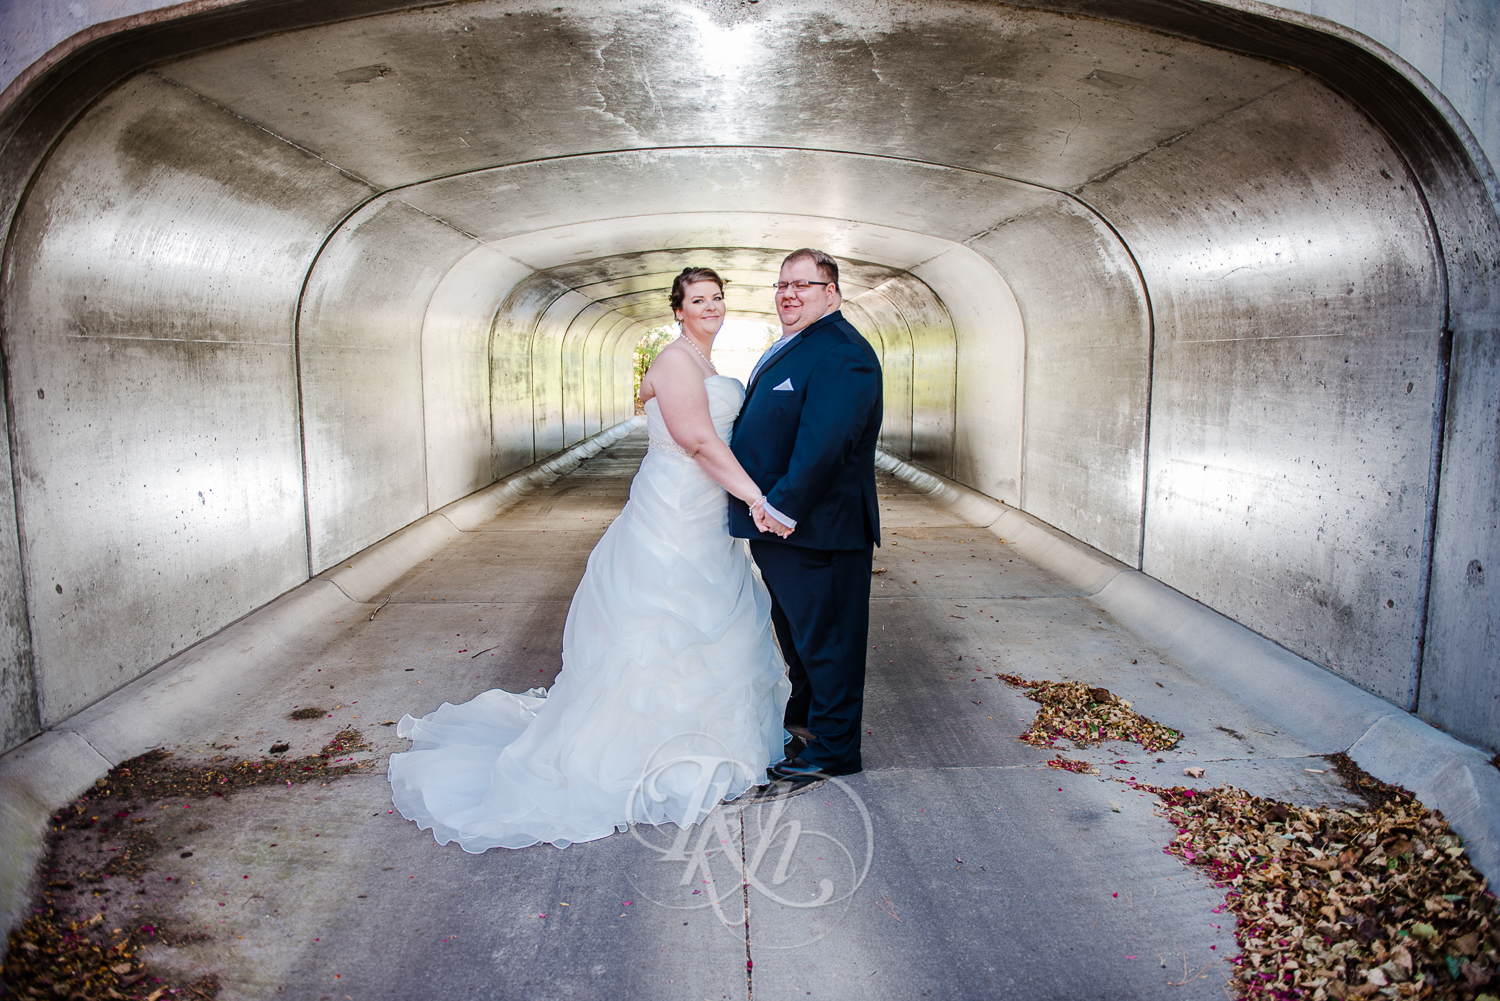  Woodbury Wedding Photography - Amber & Tristan - RKH Images-17 